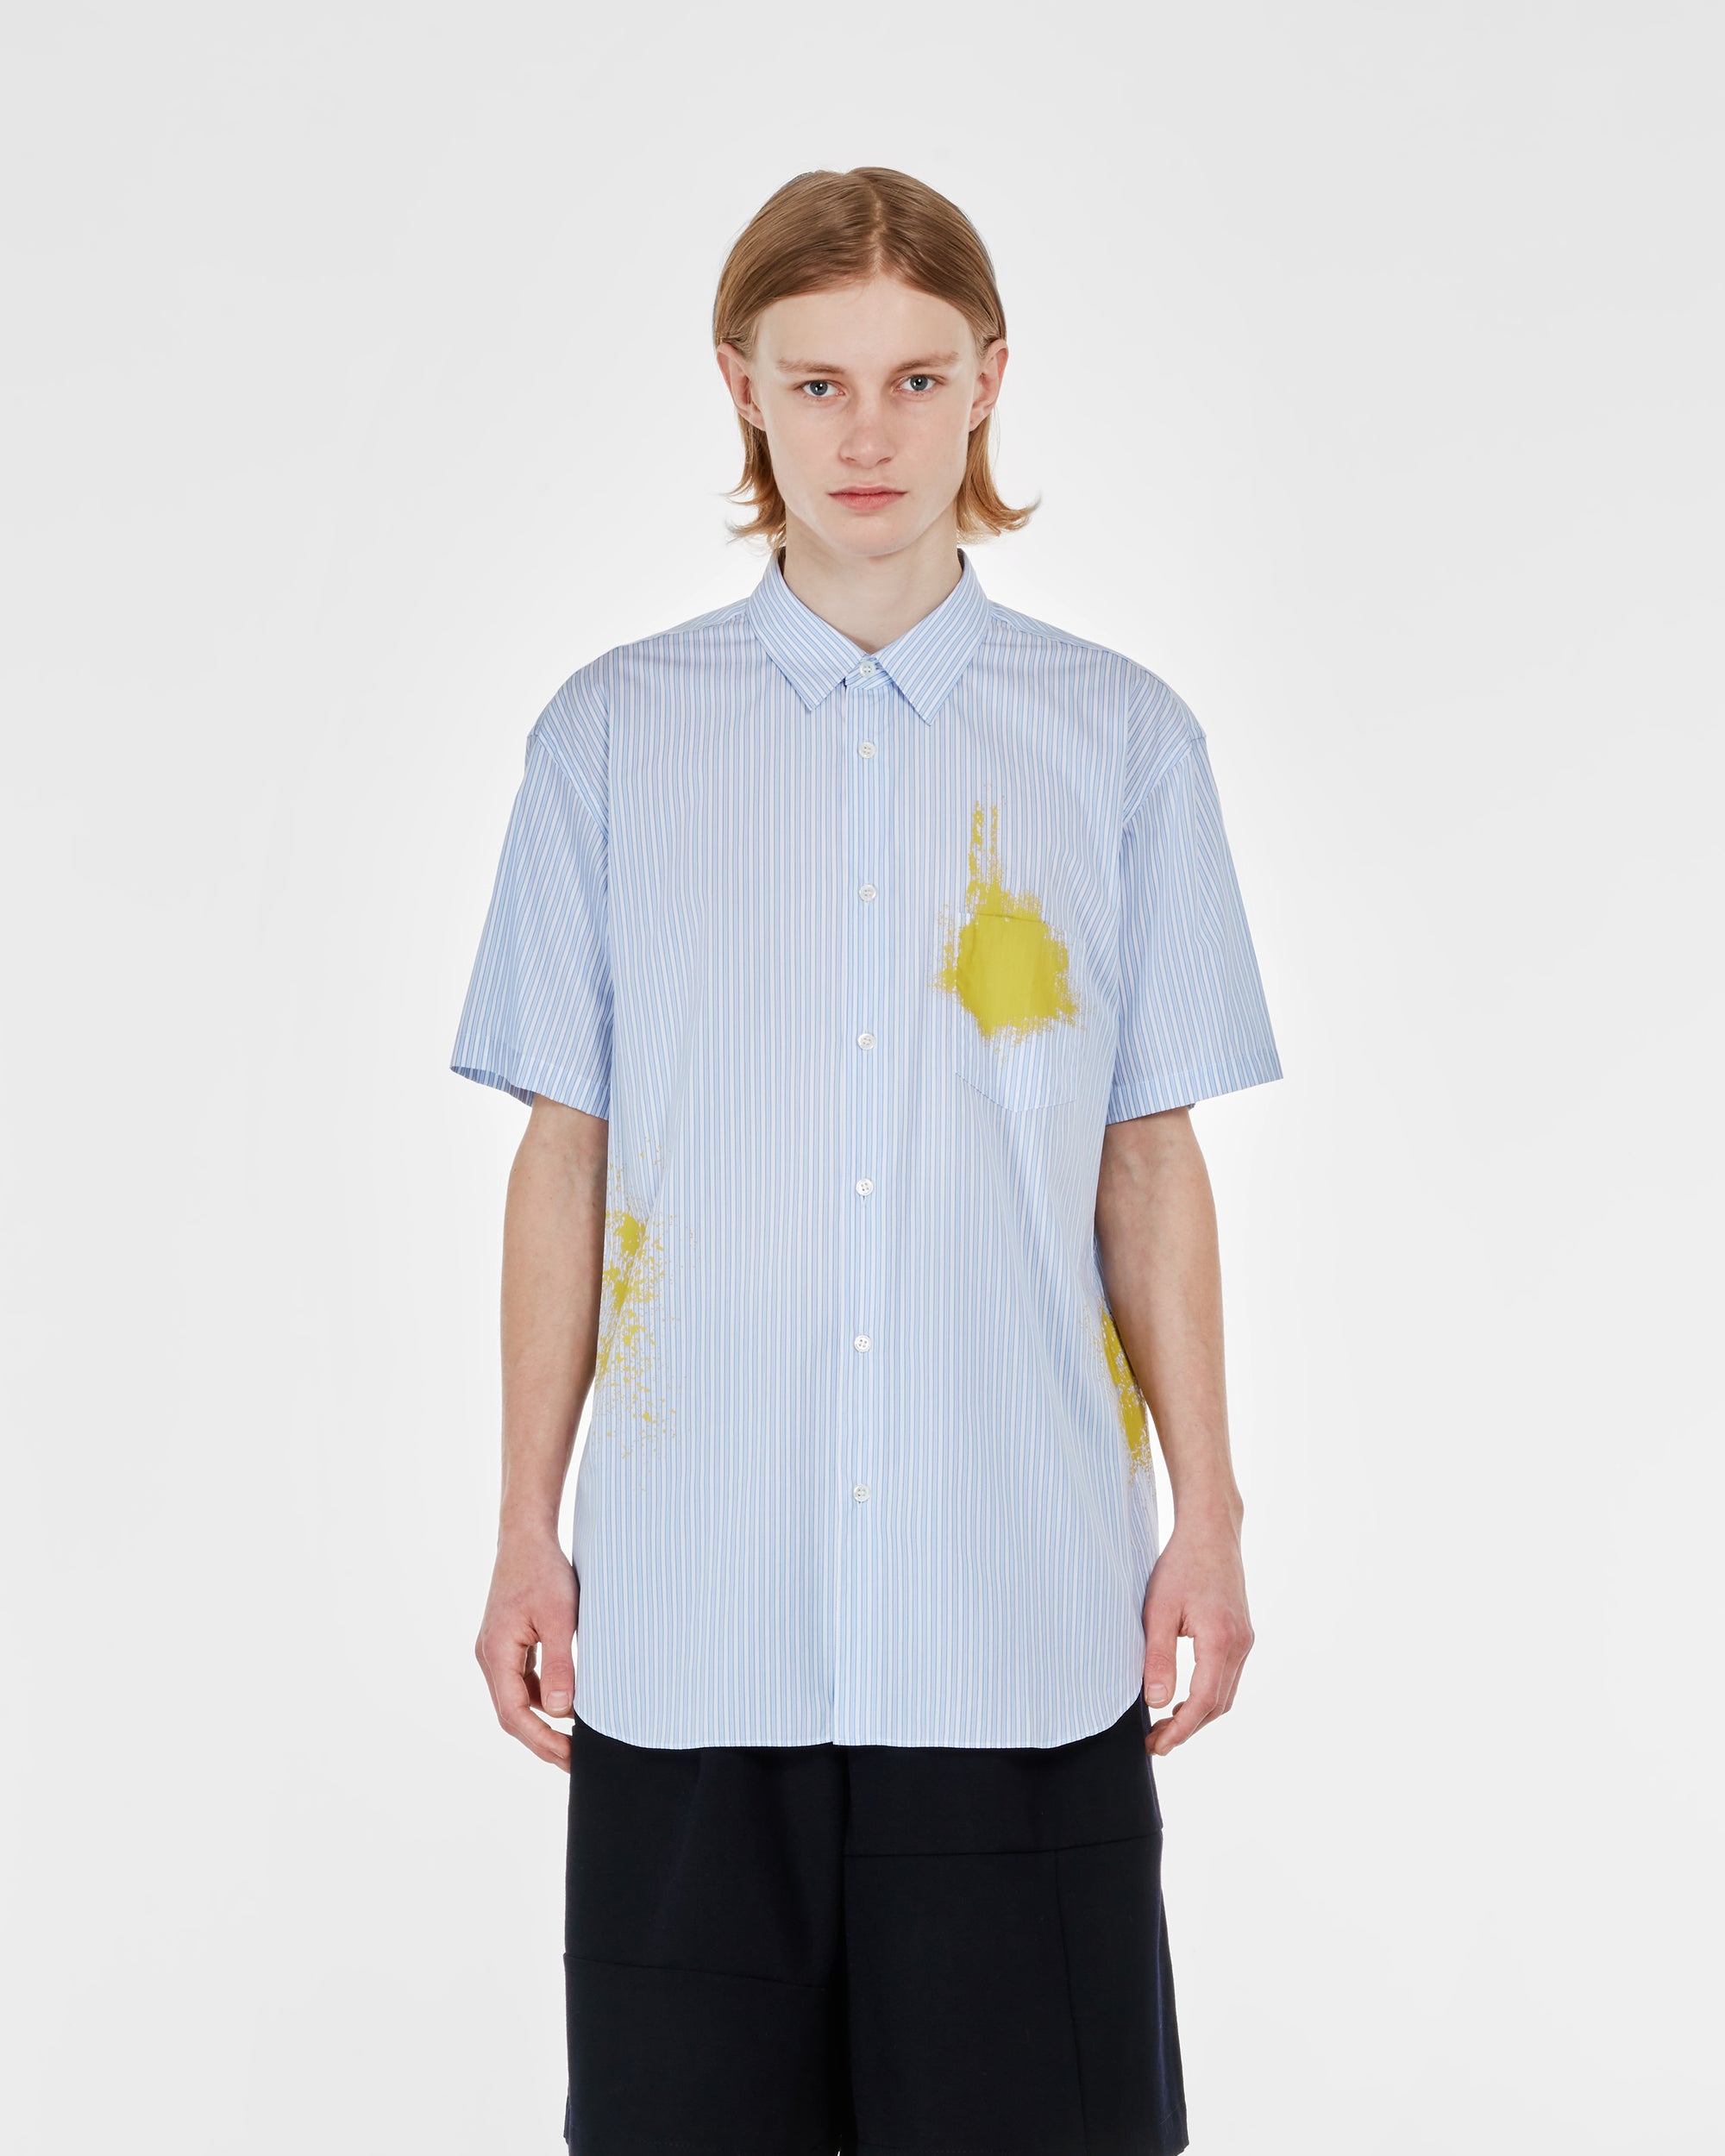 CDG Shirt - Men's Cotton Poplin Garment Printed Short Sleeve Shirt - (Stripe) view 2